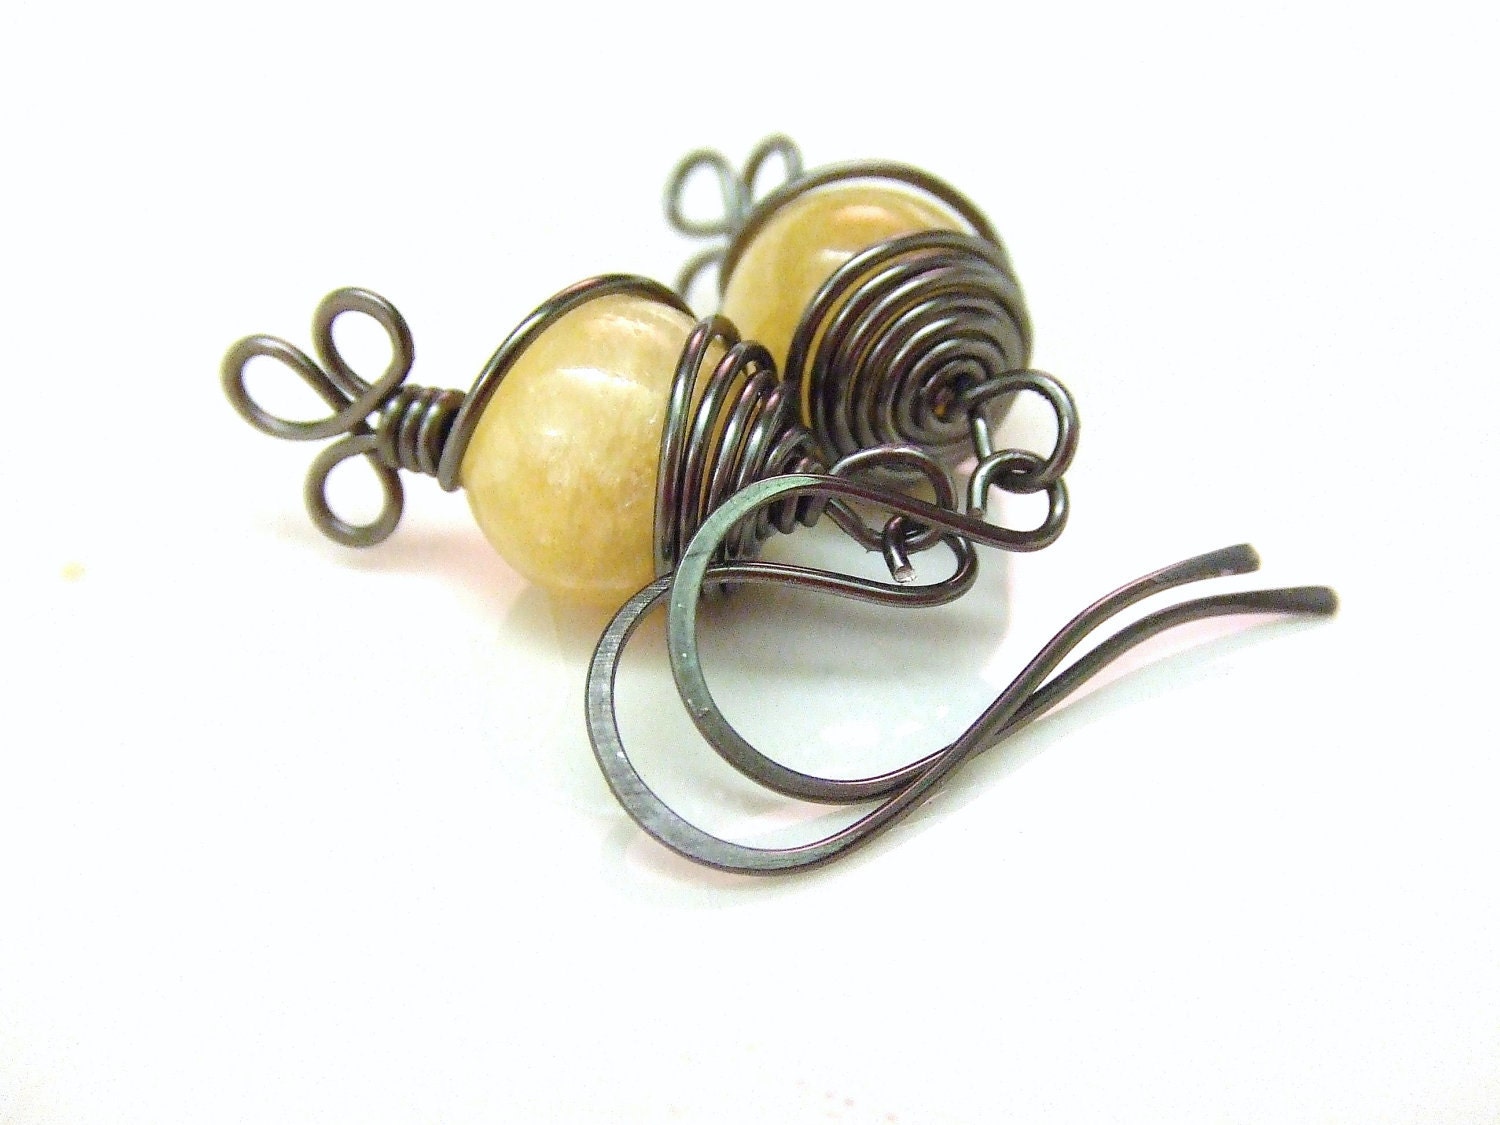 Honey Agate Earrings Wire Wrap Gunmetal Earrings Vintage Inspired Boho Chic Filigree Antique Earrings Yellow Earrings Wire Wrap Jewelry - deannewatsonjewelry